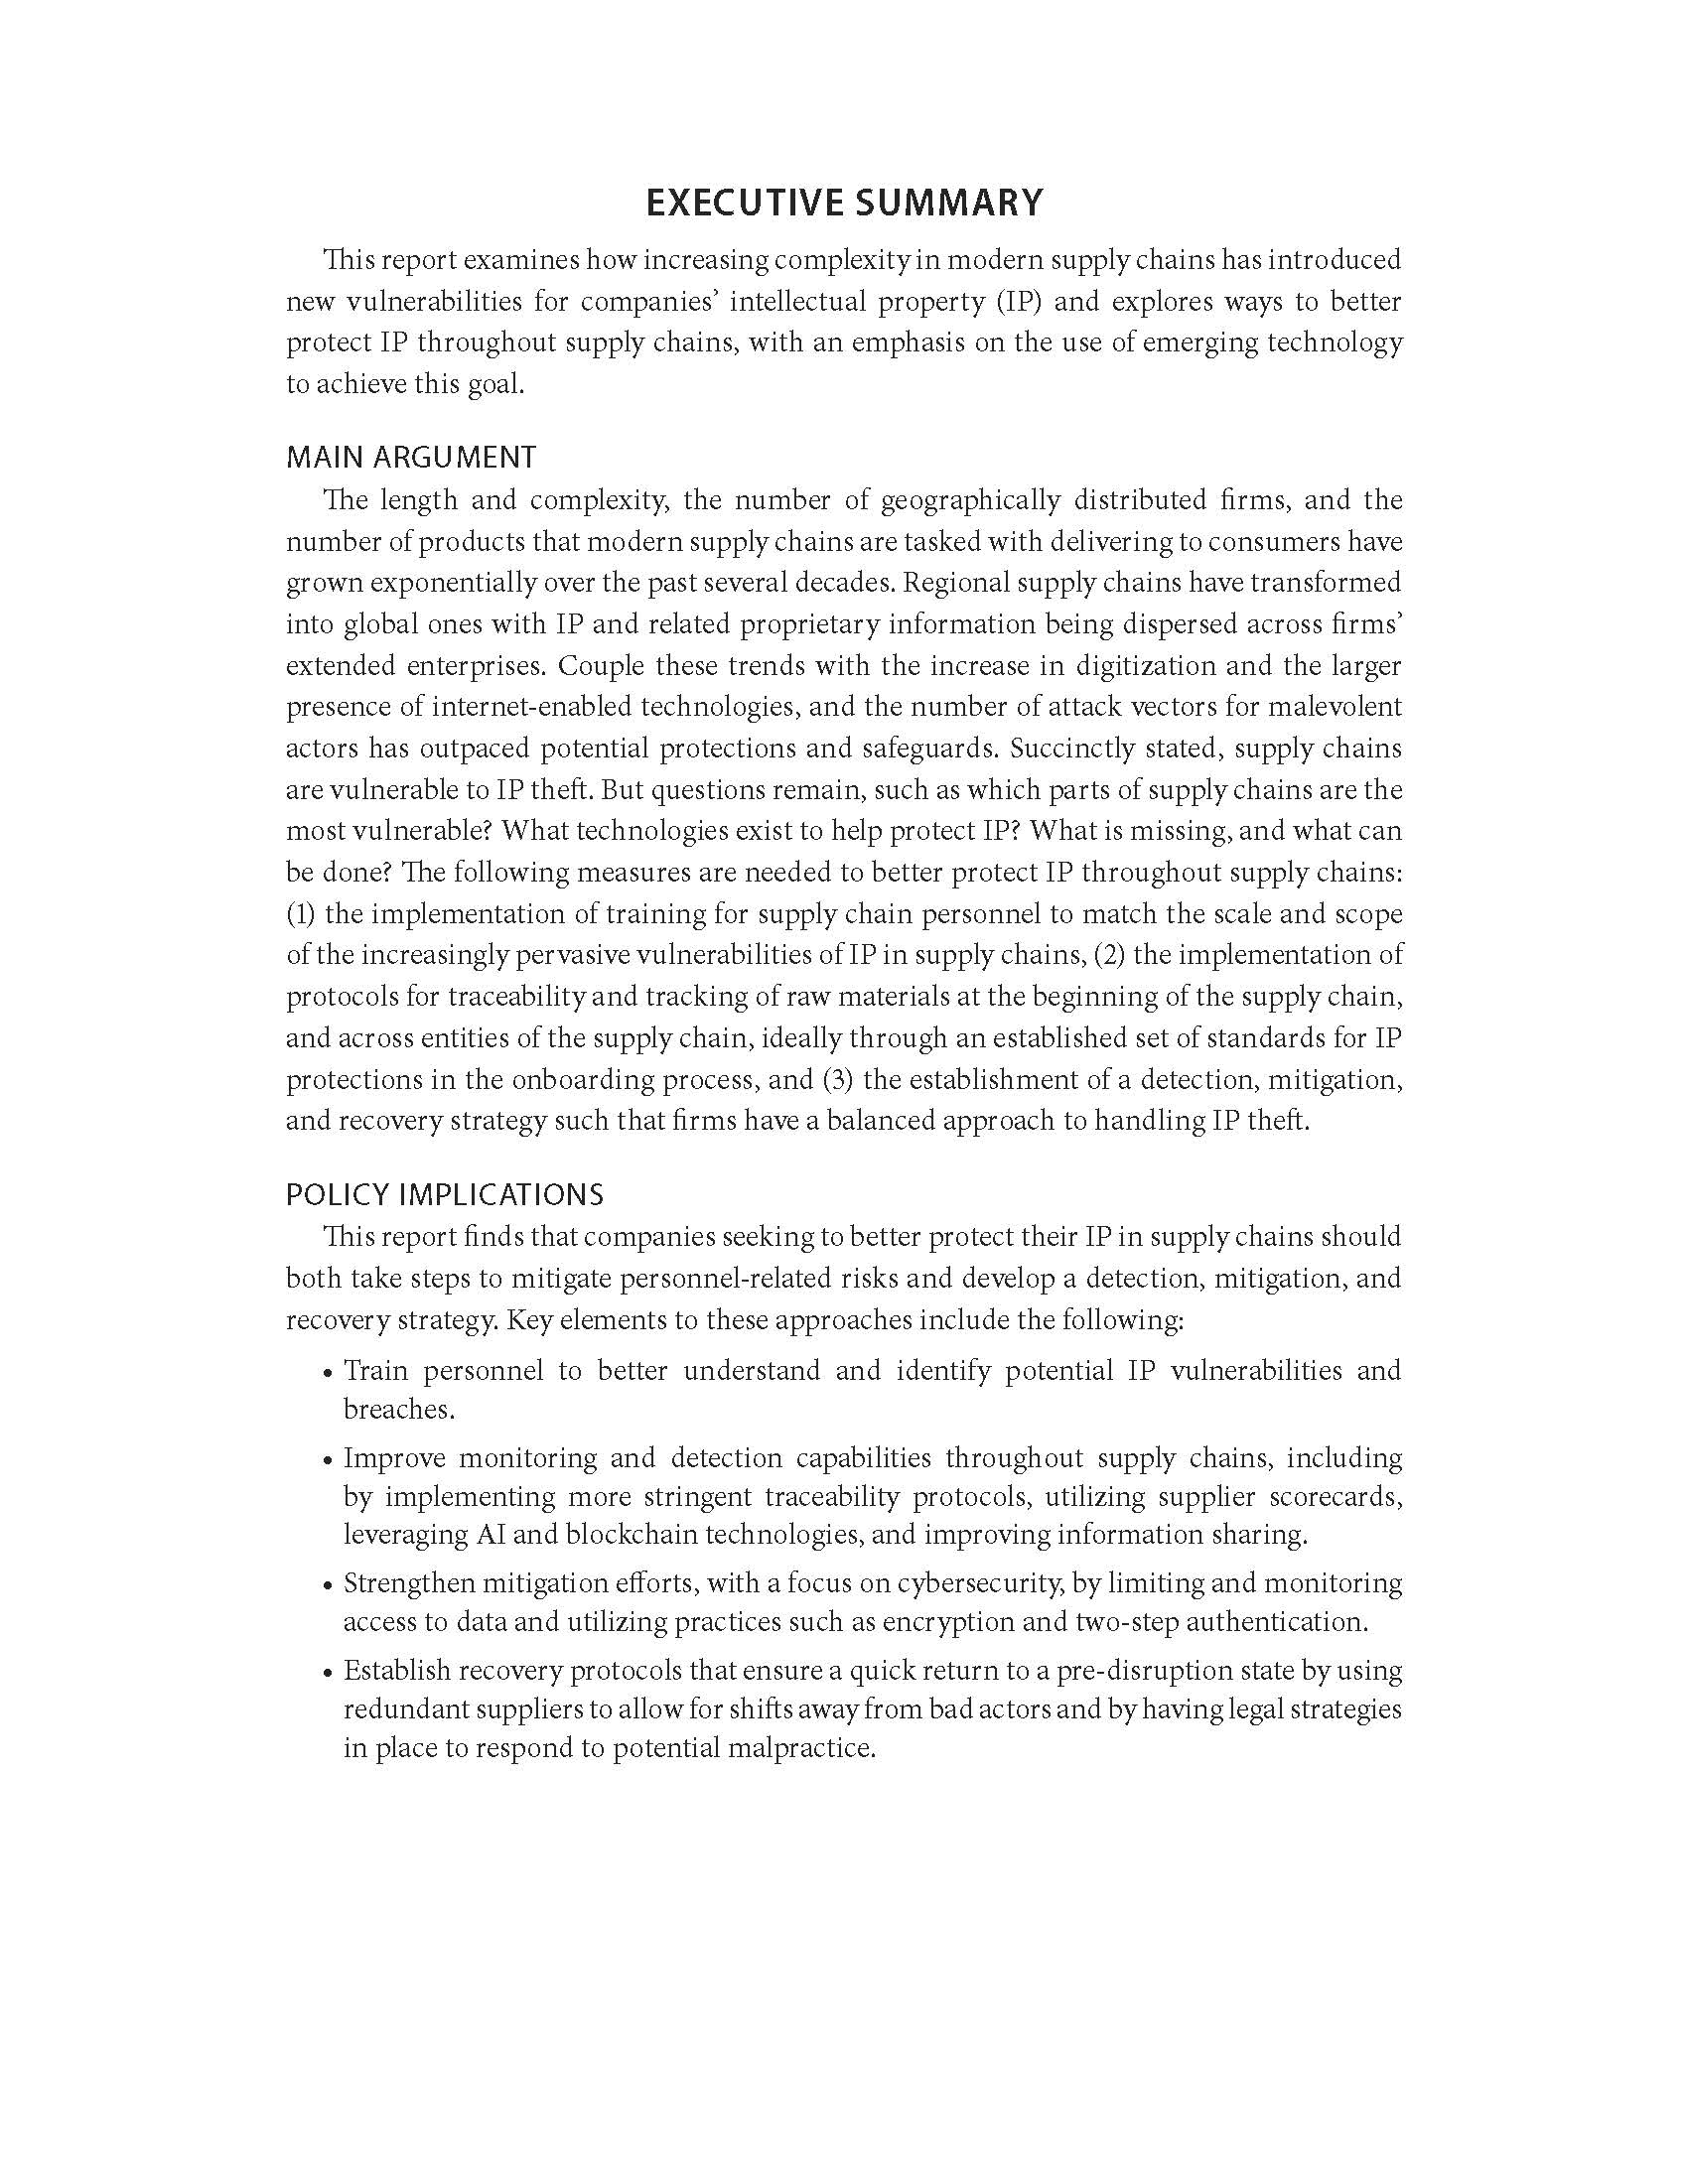 NBR21世纪知识产权的守护者-全球供应链行业英文版44页_页面_09.jpg